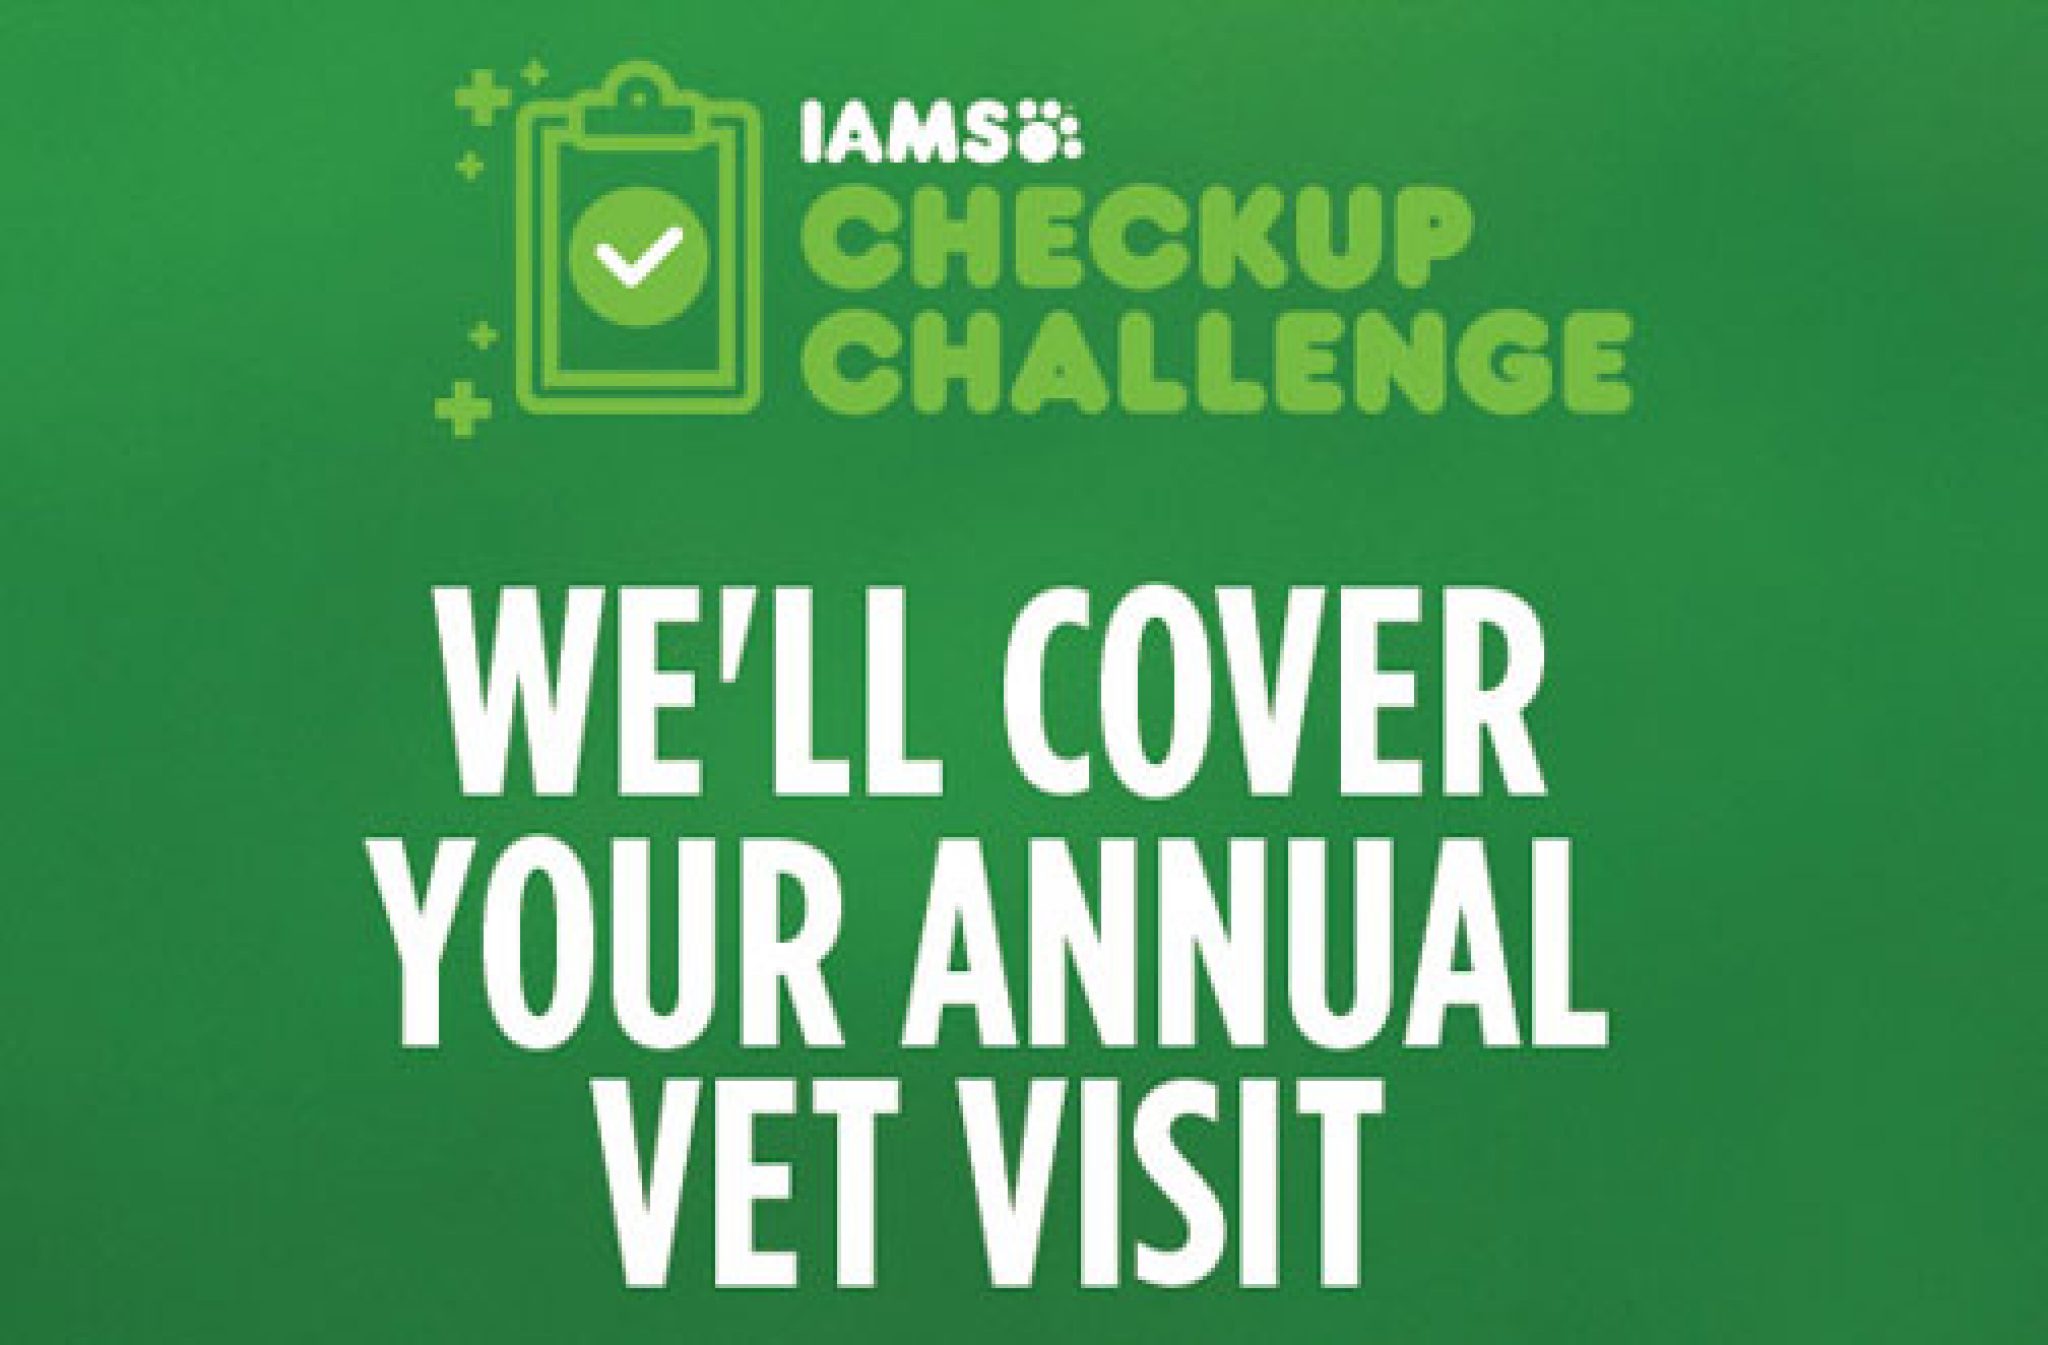 iams-rebate-checkup-challenge-deals-from-savealoonie